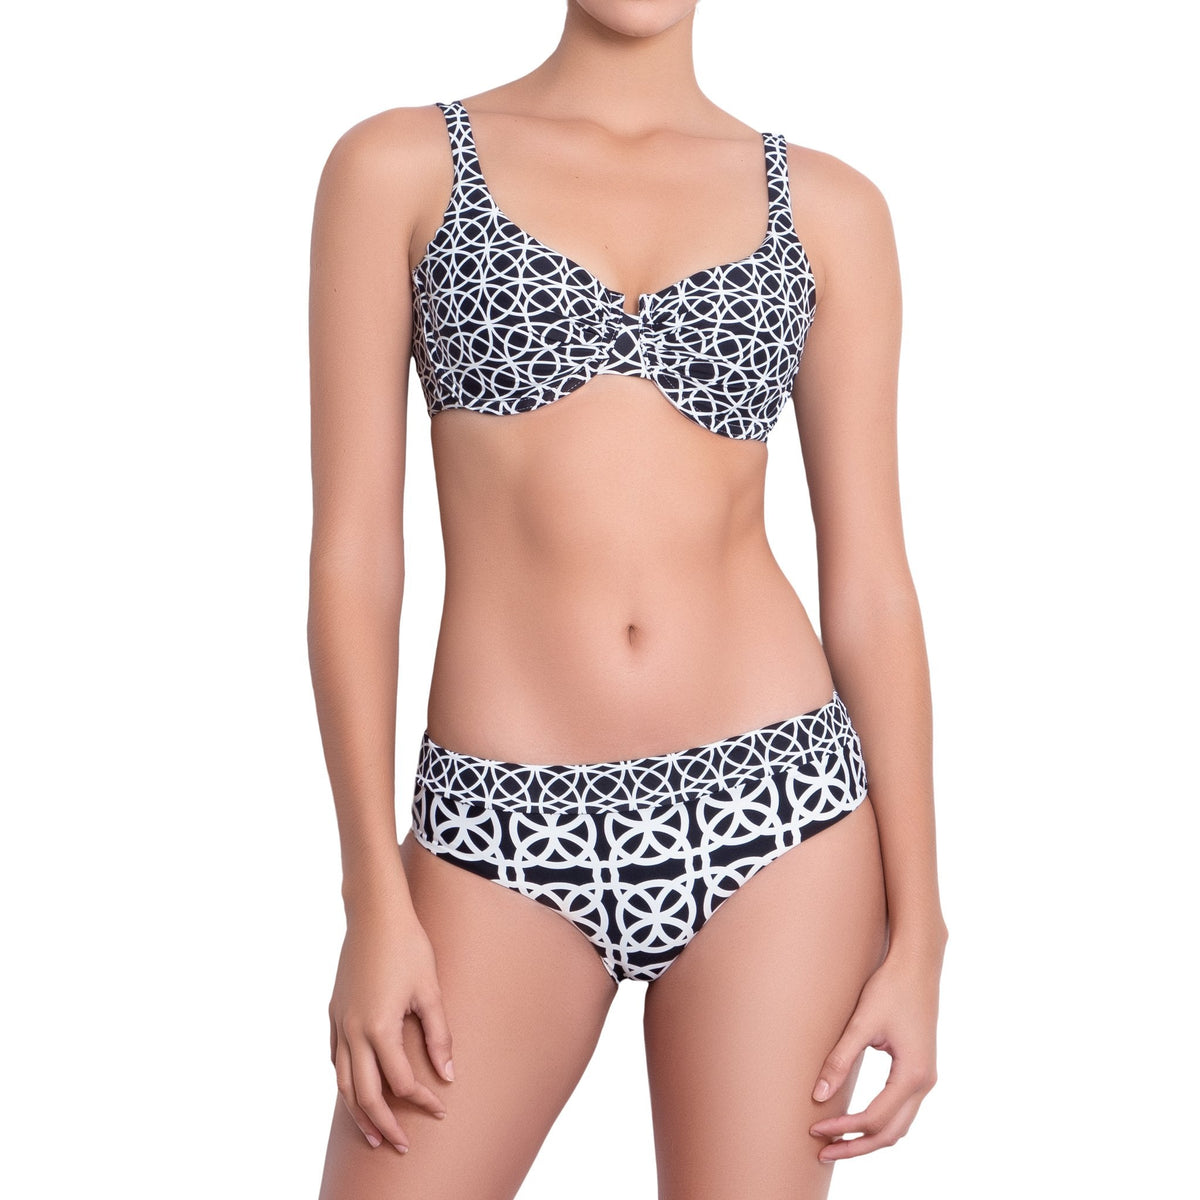 BRIGITTE medium rise panty, printed bikini bottom by ALMA swimwear ‚Äì front view 1